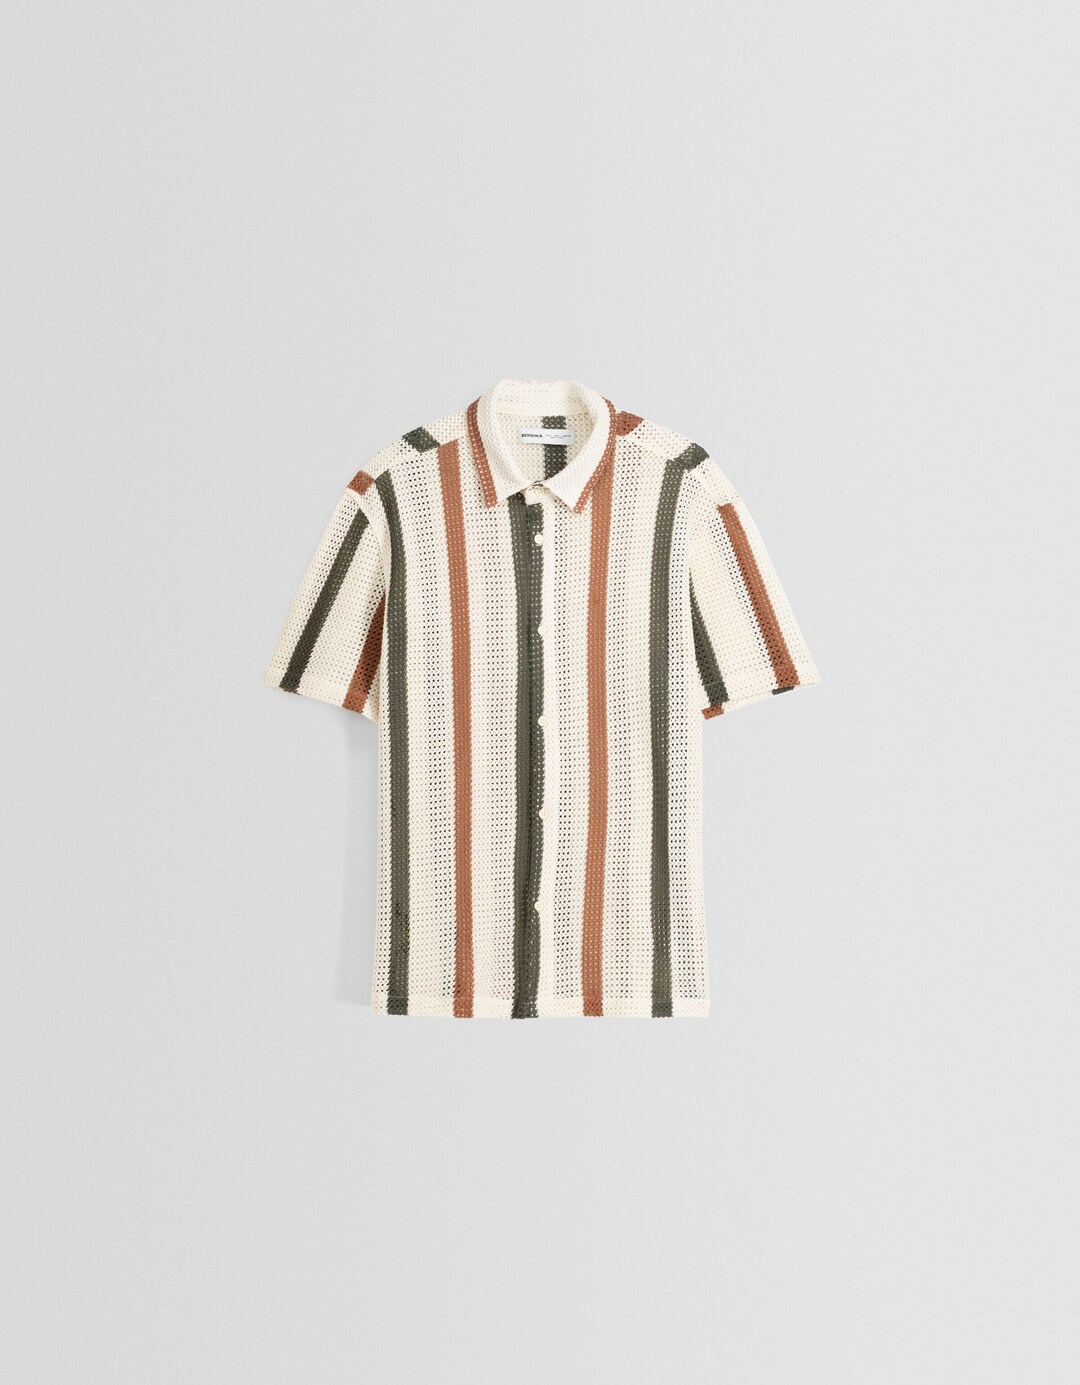 Rustic striped short sleeve shirt